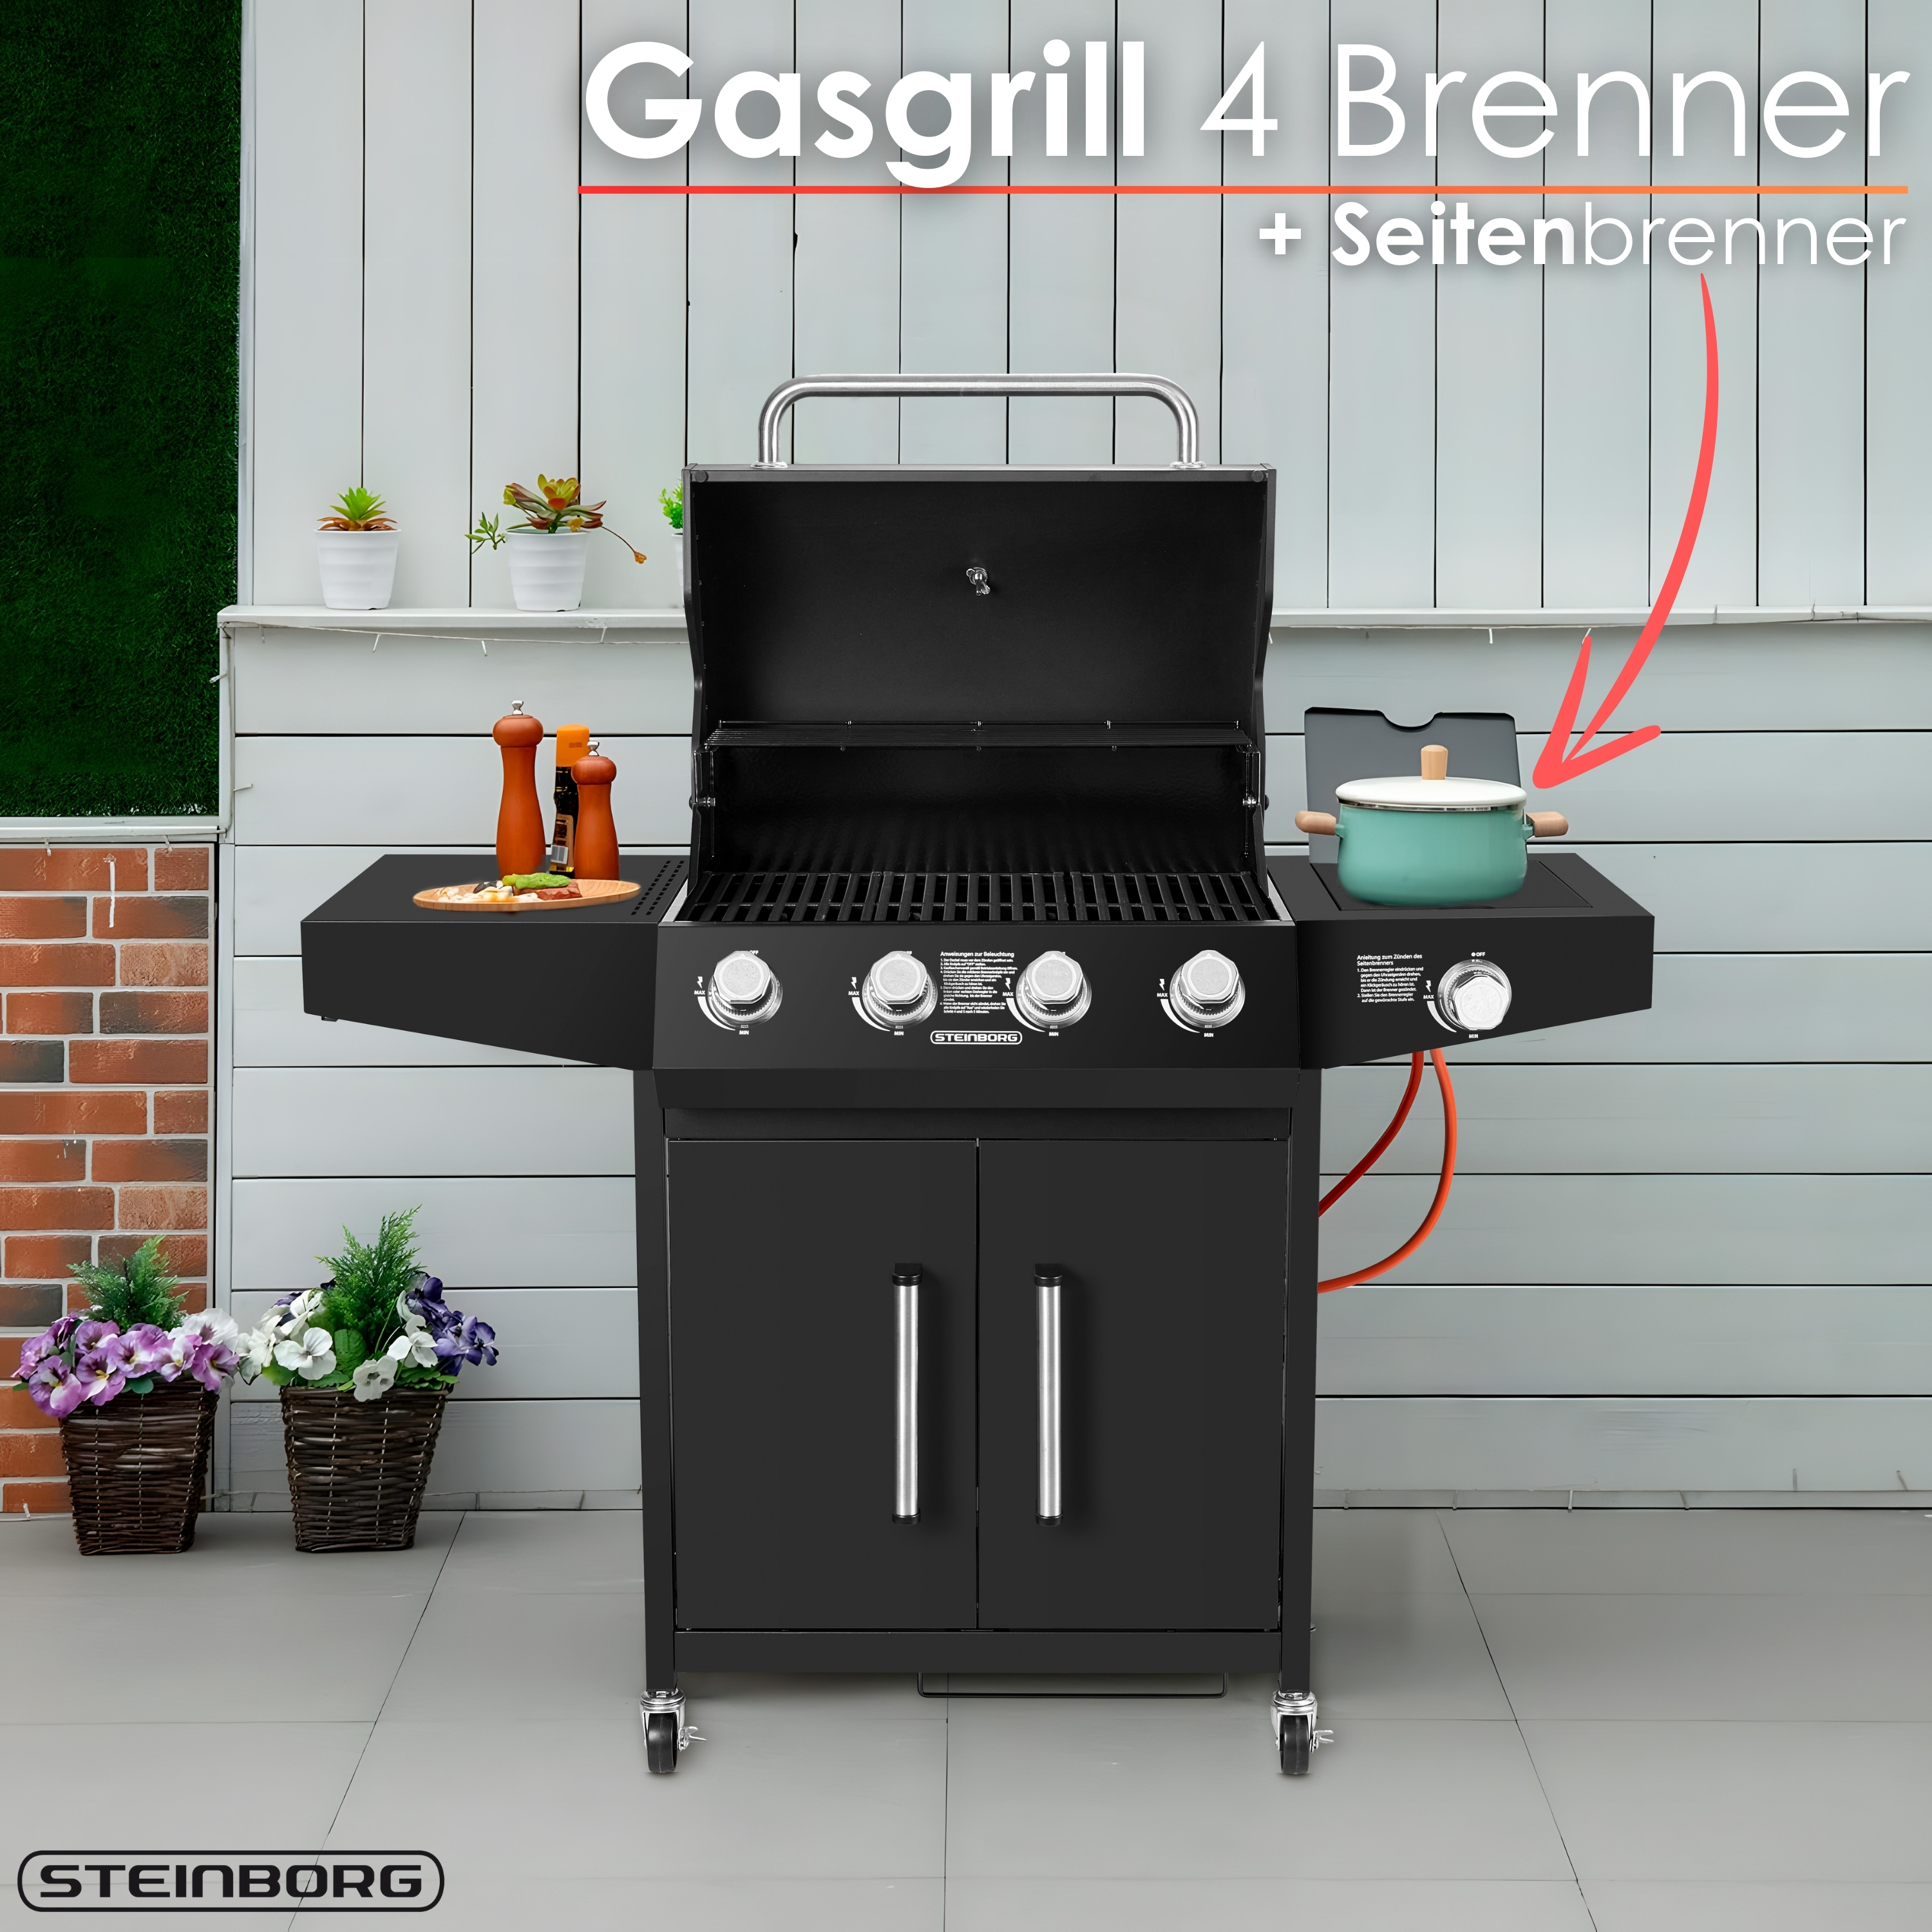 Steinborg SB-8180 Gasgrill 4 Brenner